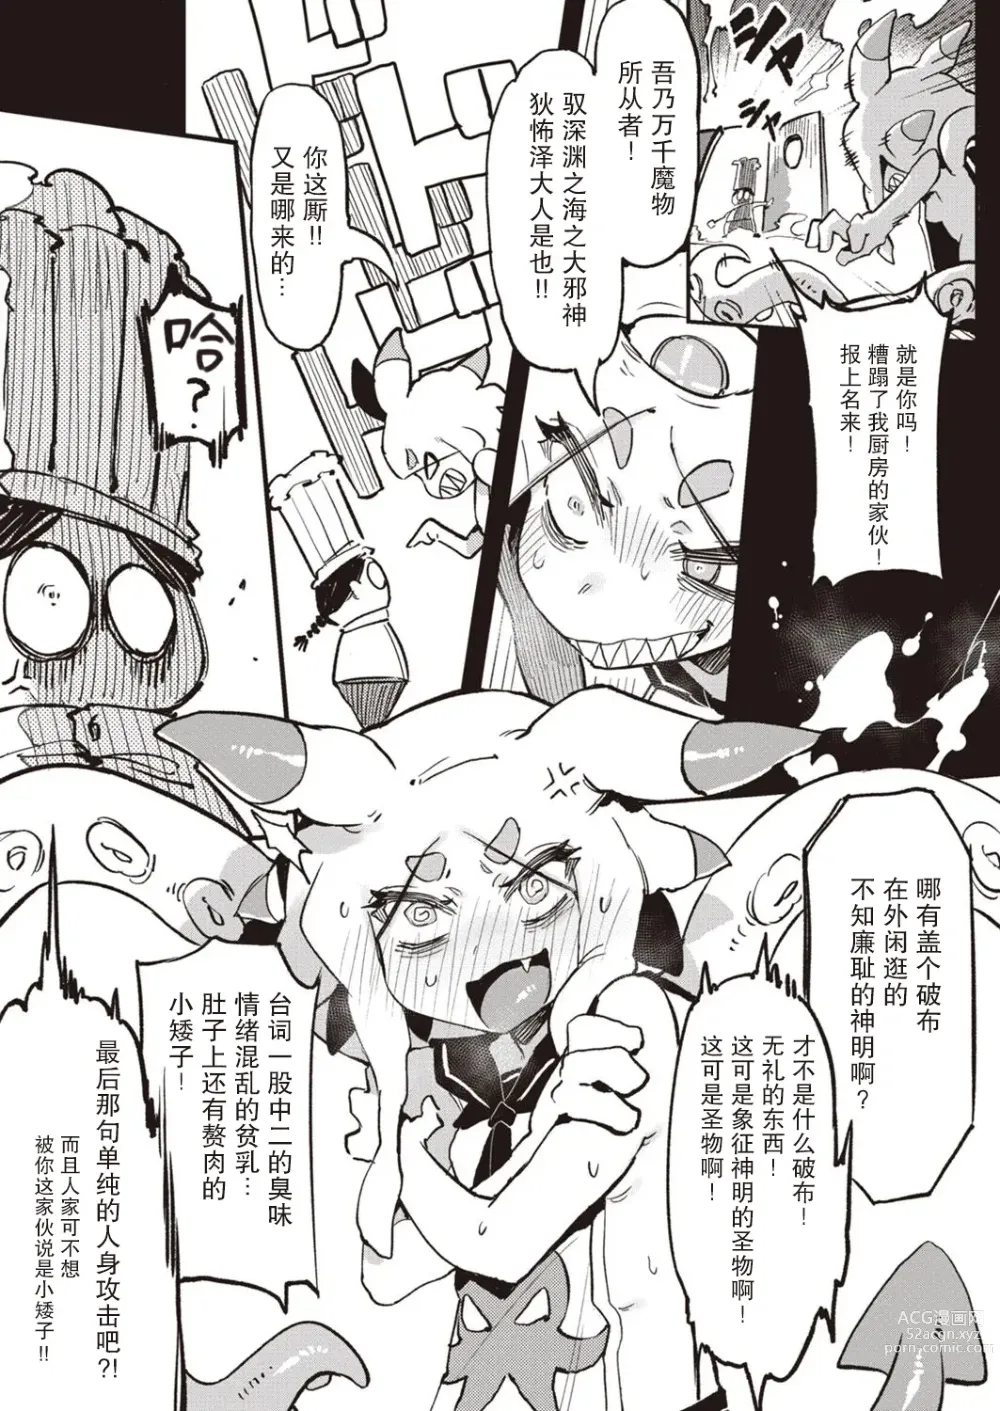 Page 15 of manga Inogami